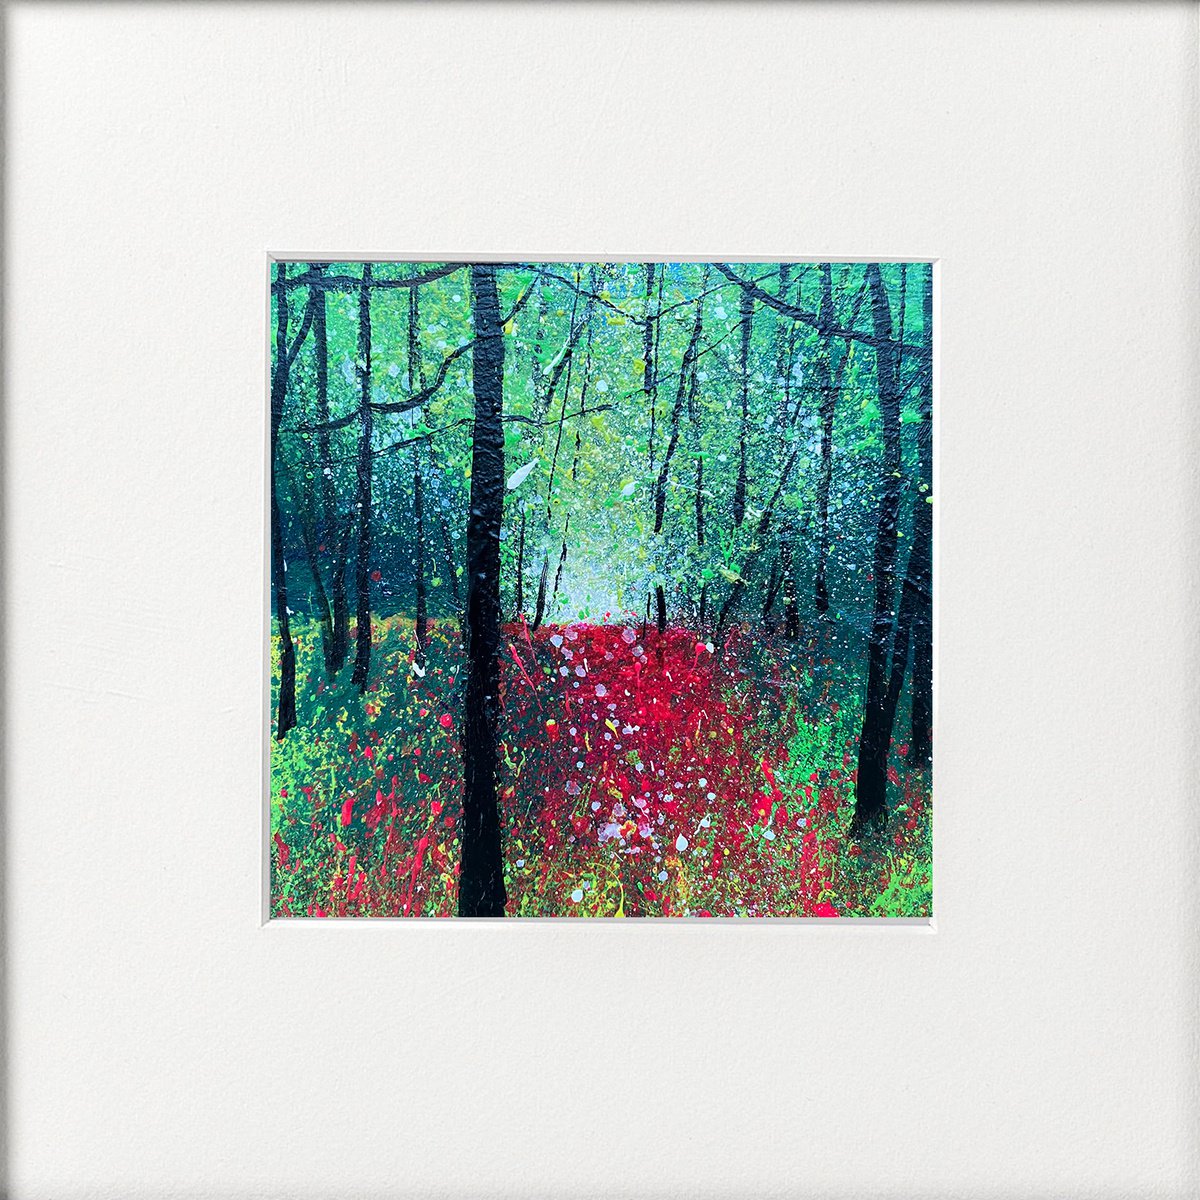 Seasons - Late Spring Woodland Foxglove Glade by Teresa Tanner